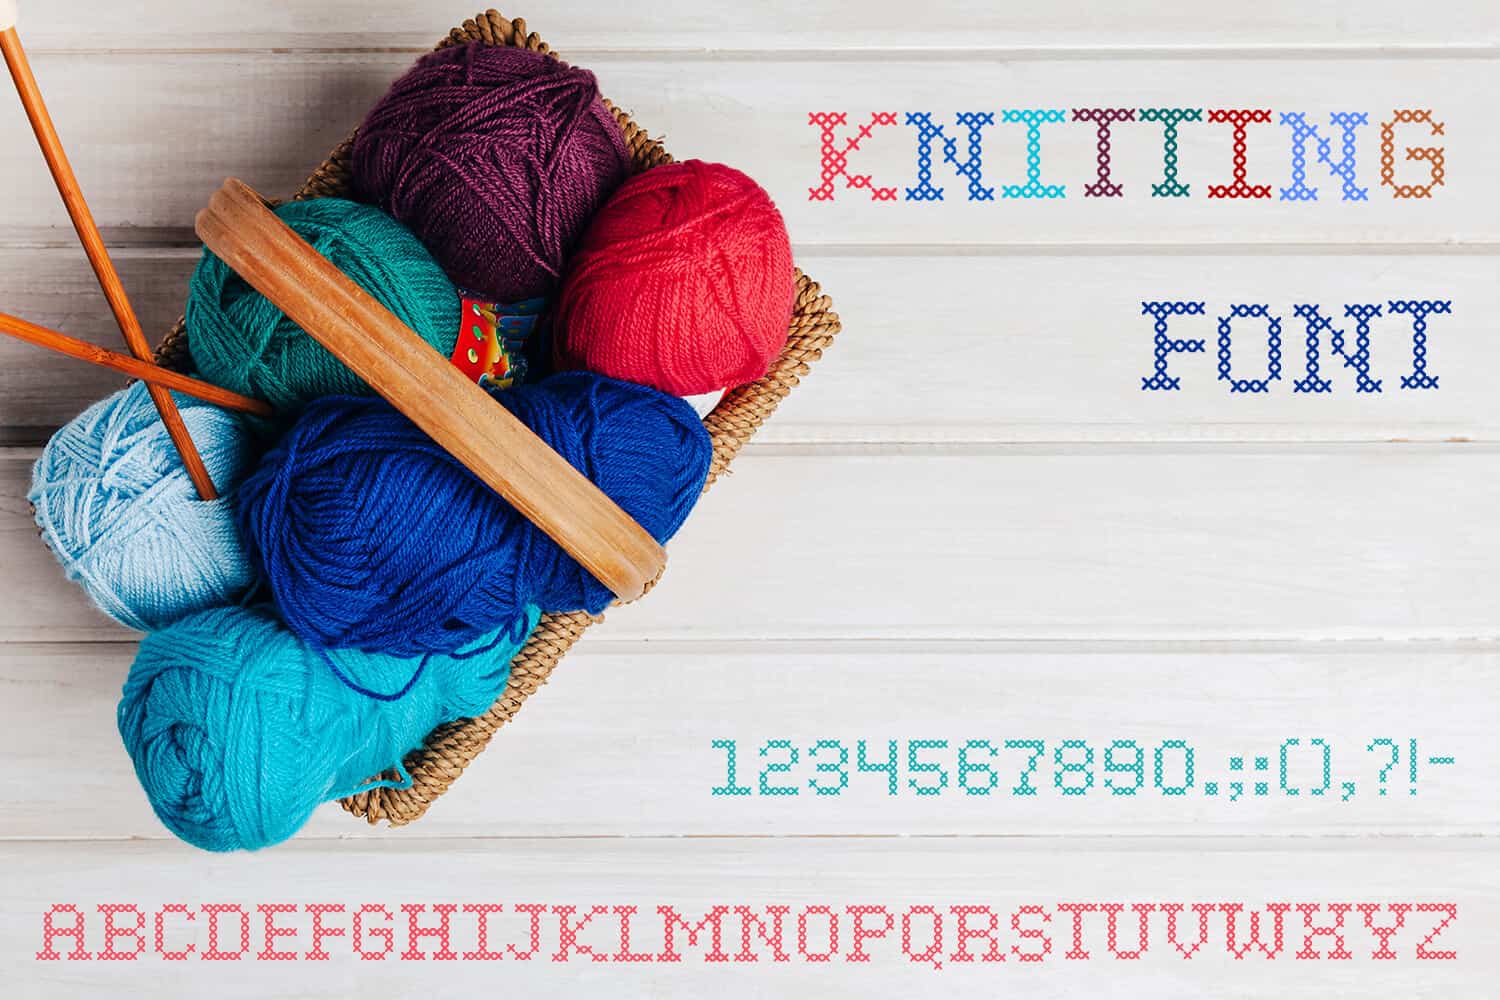 Knitting Font